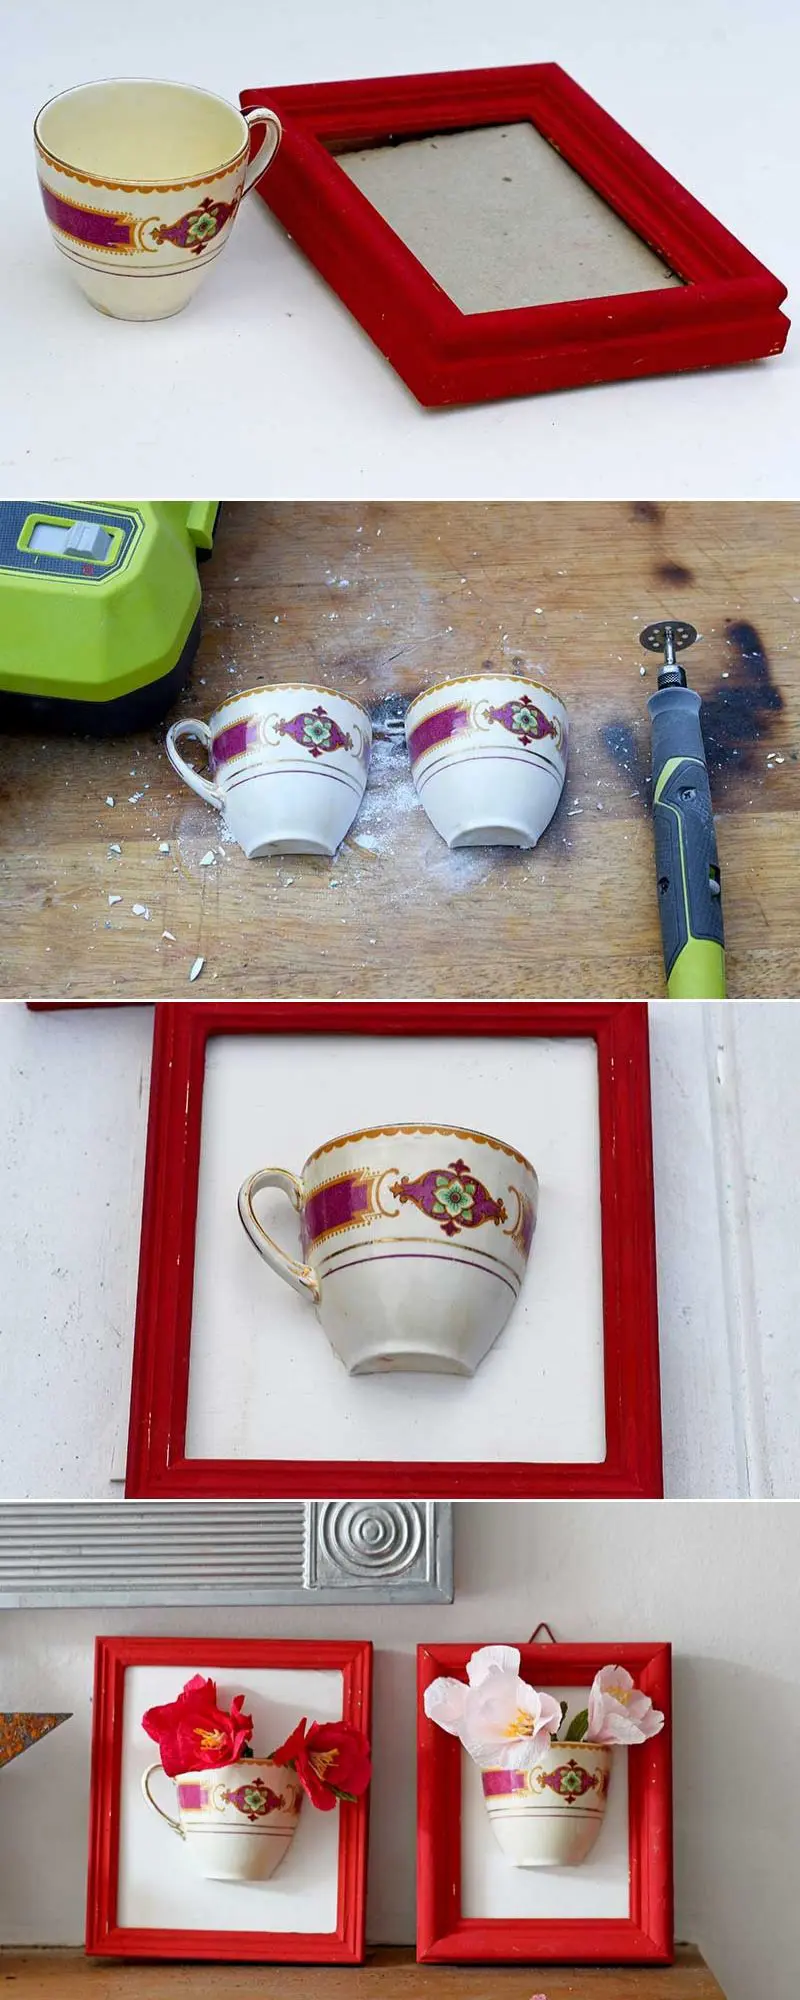 DIY China teacup wall vase